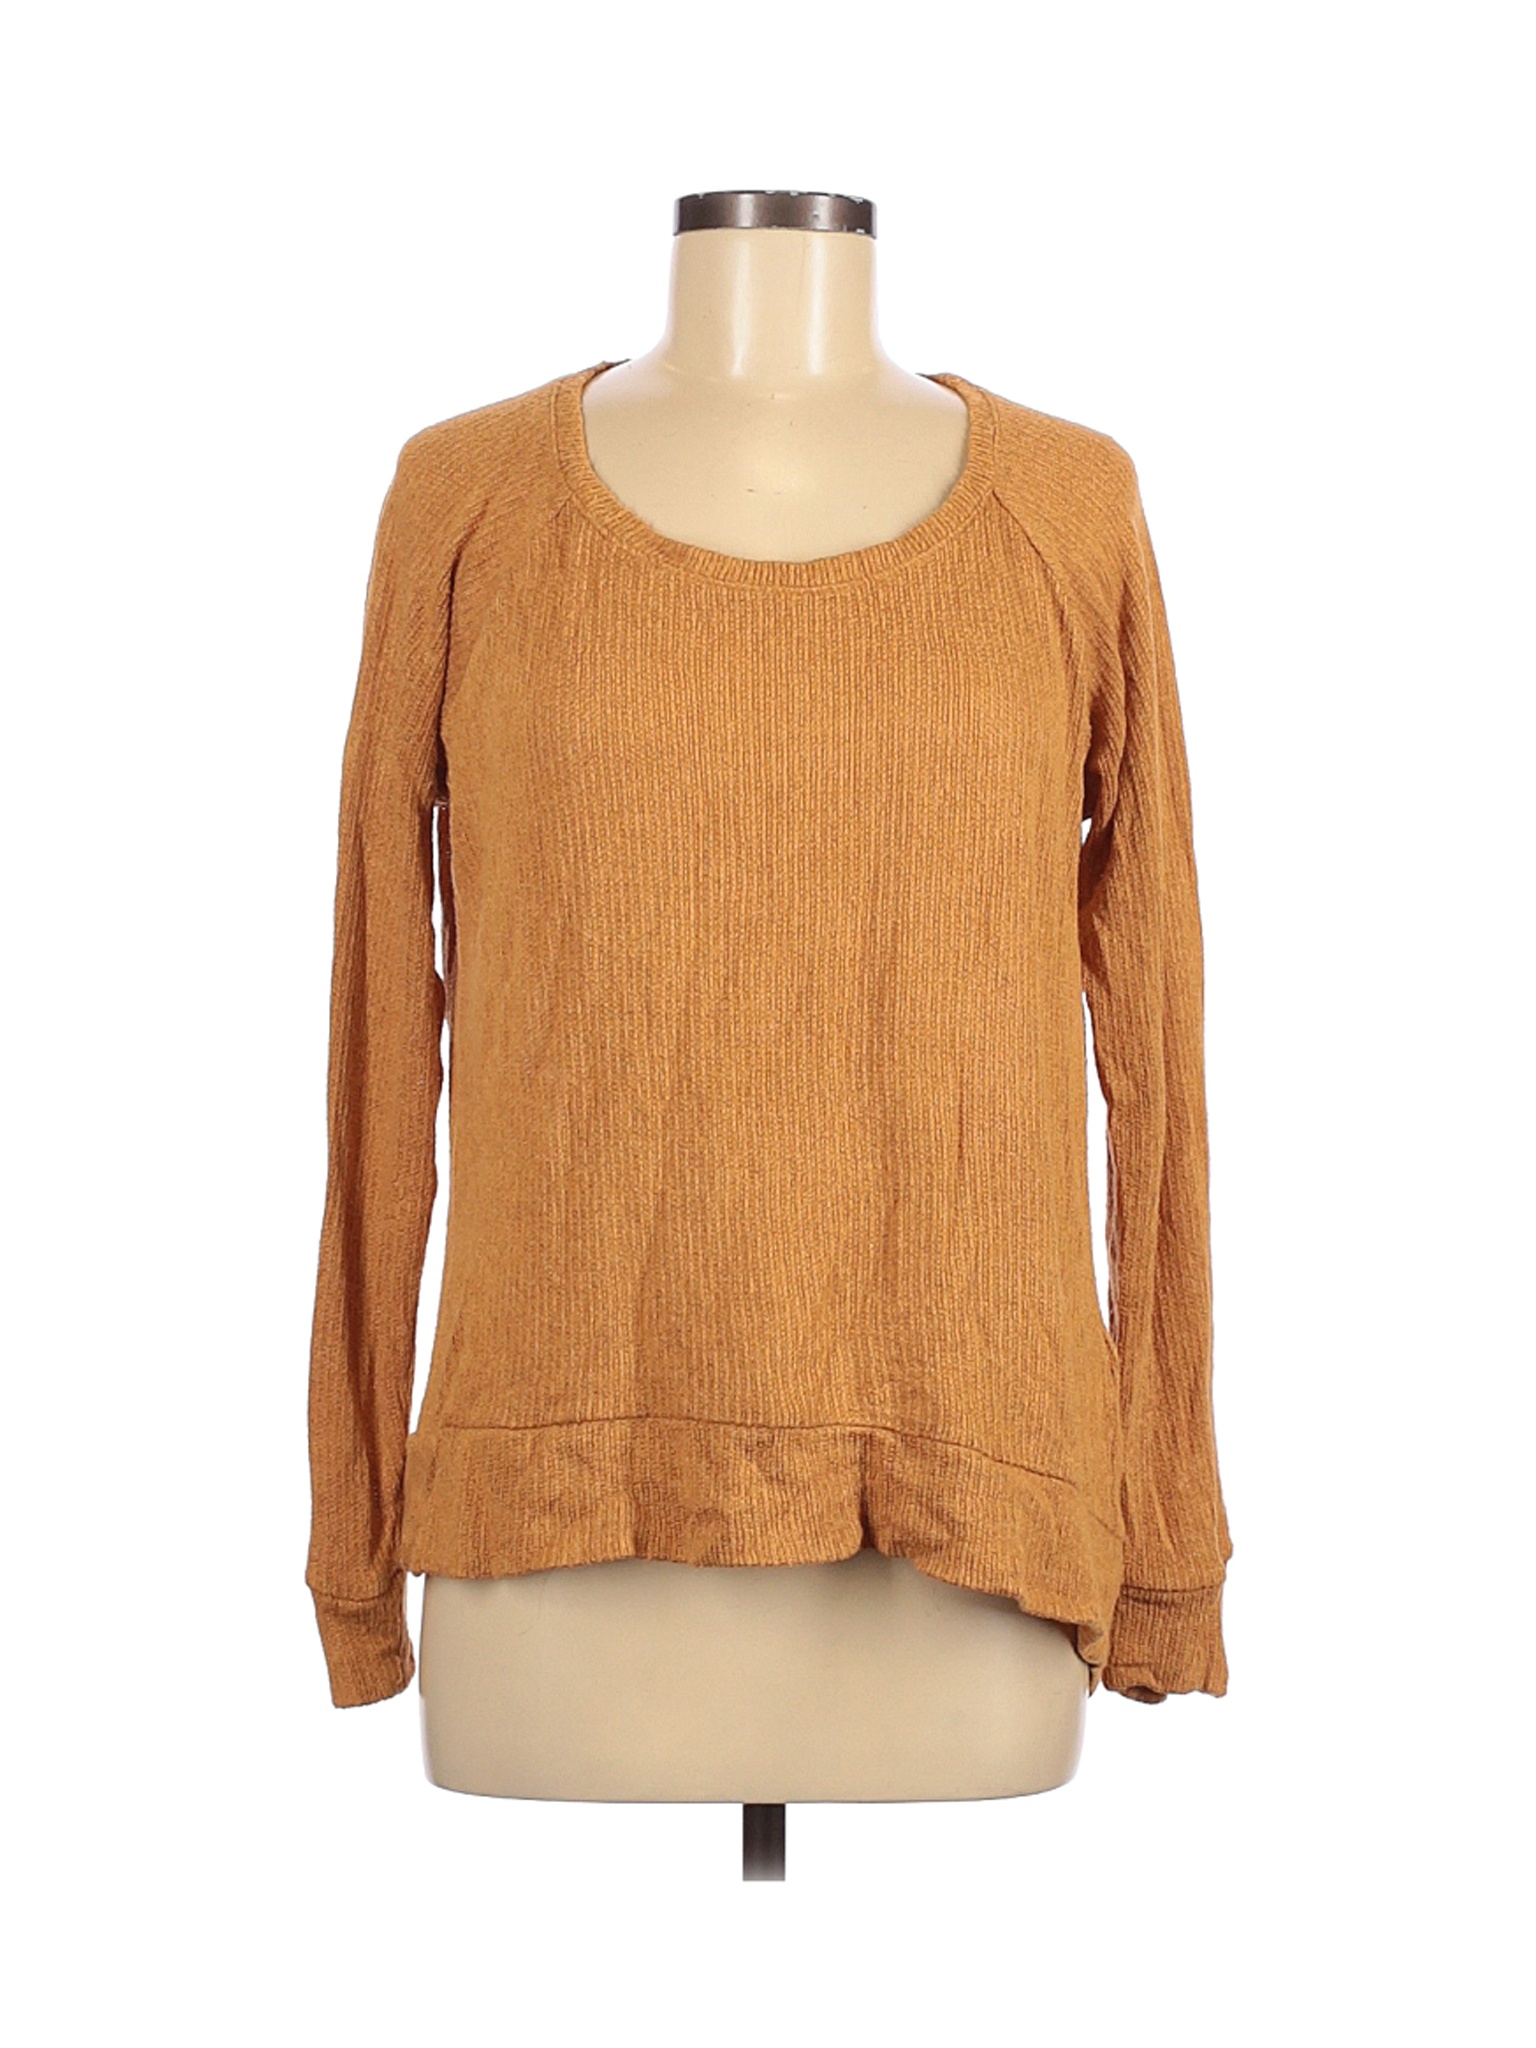 Gap Women Brown Pullover Sweater M | eBay